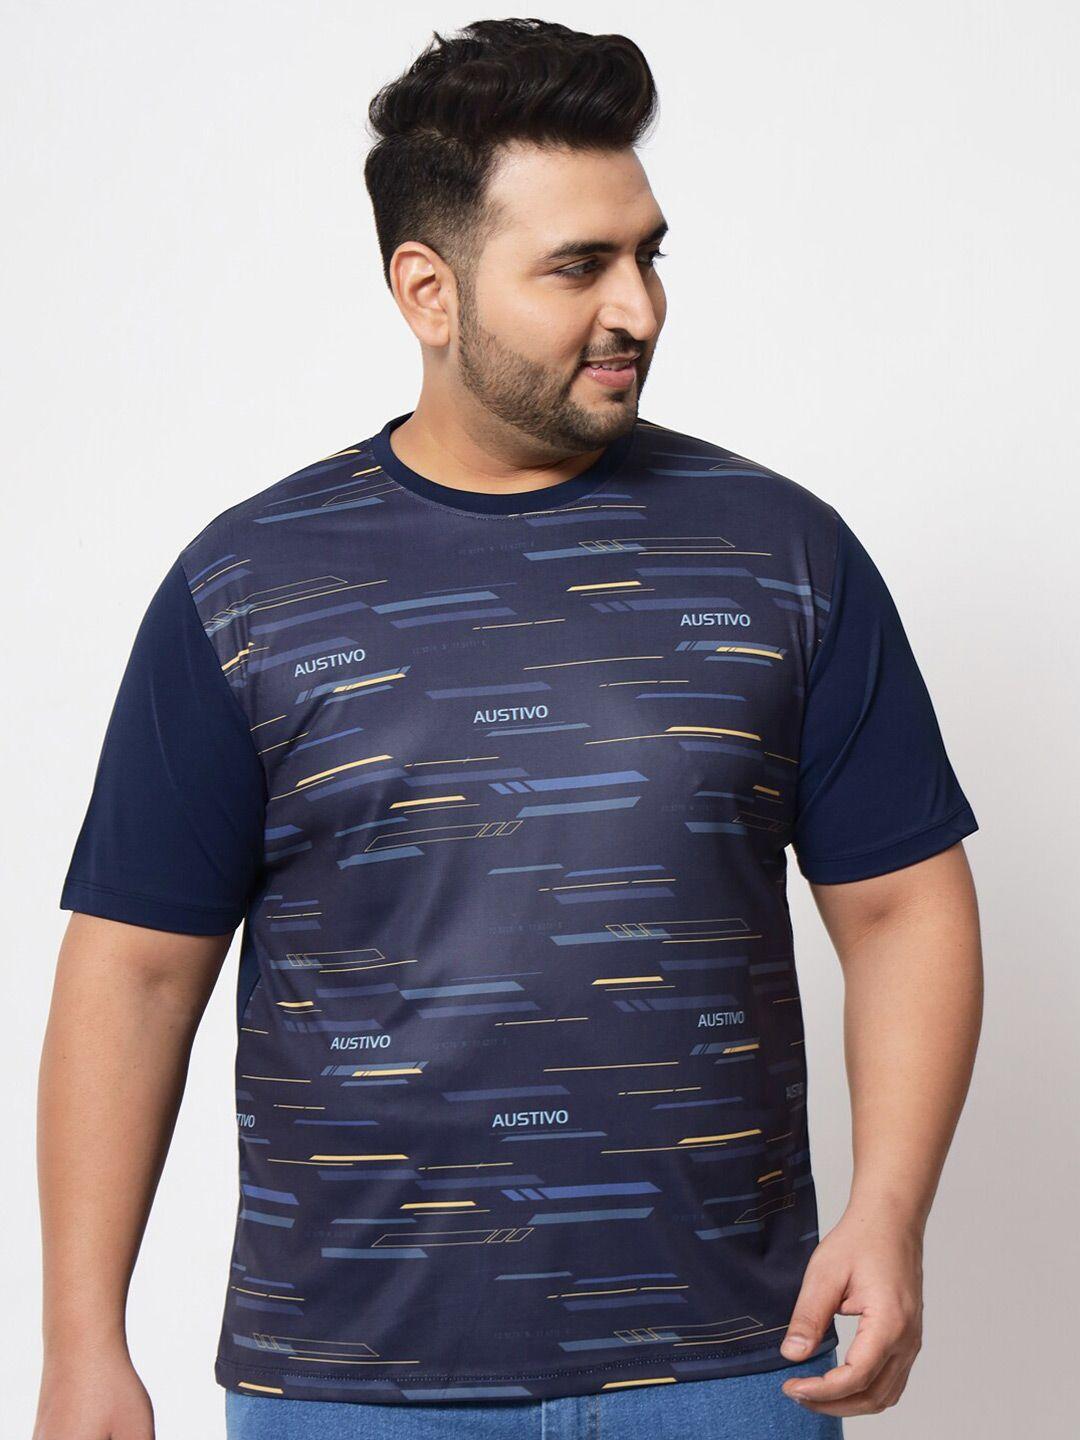 austivo men plus size navy blue & yellow printed round neck t-shirt